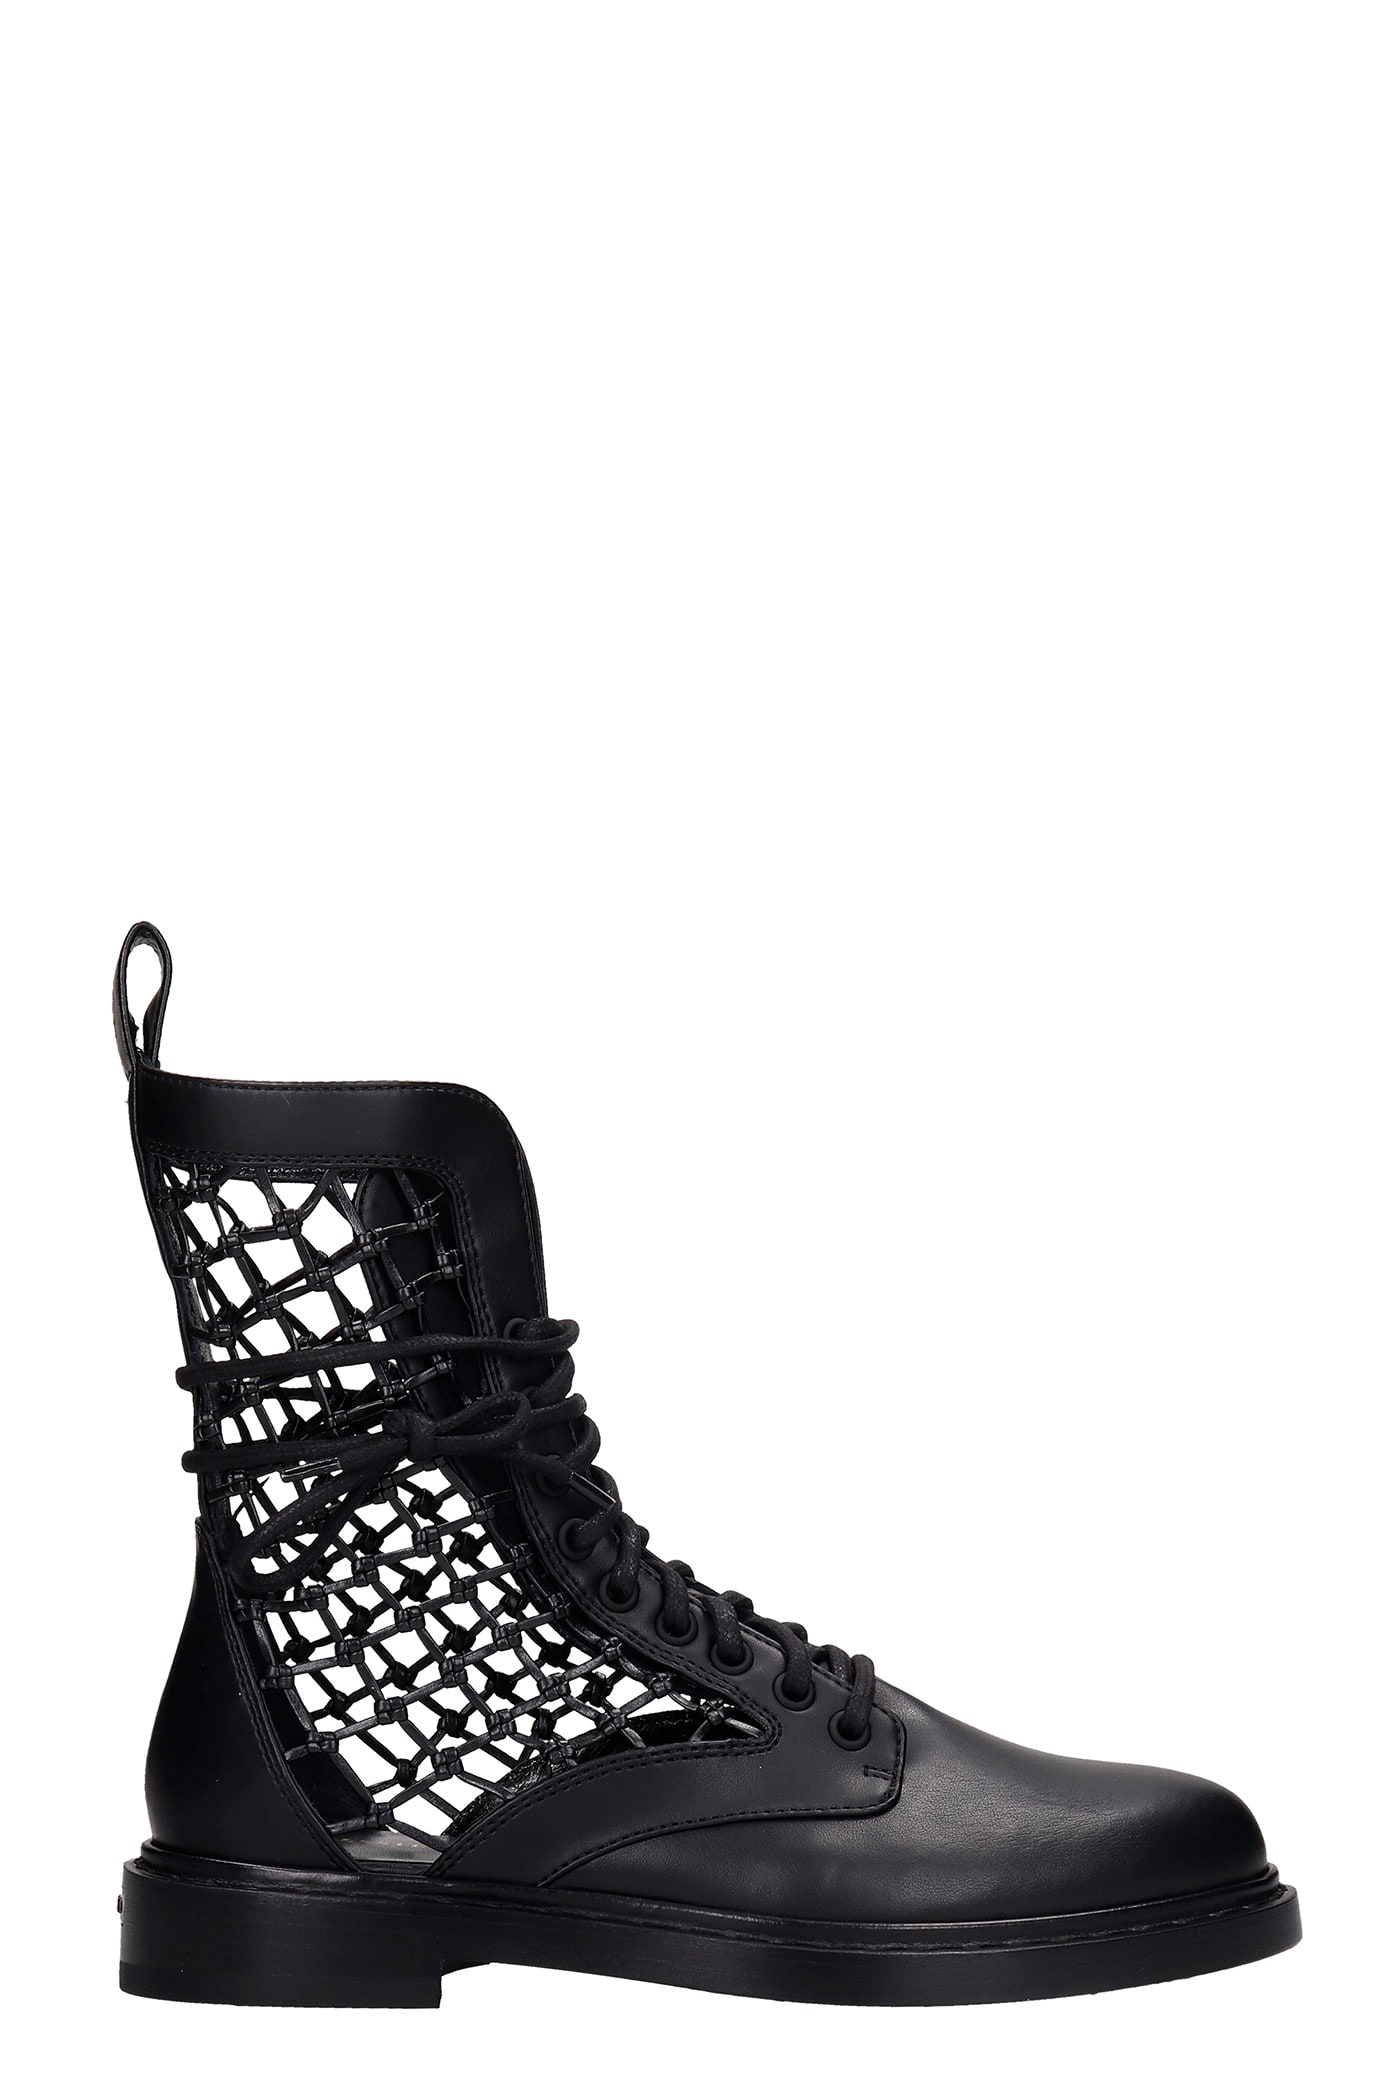 Le Silla Vanessa Combat Boots In Black Leather